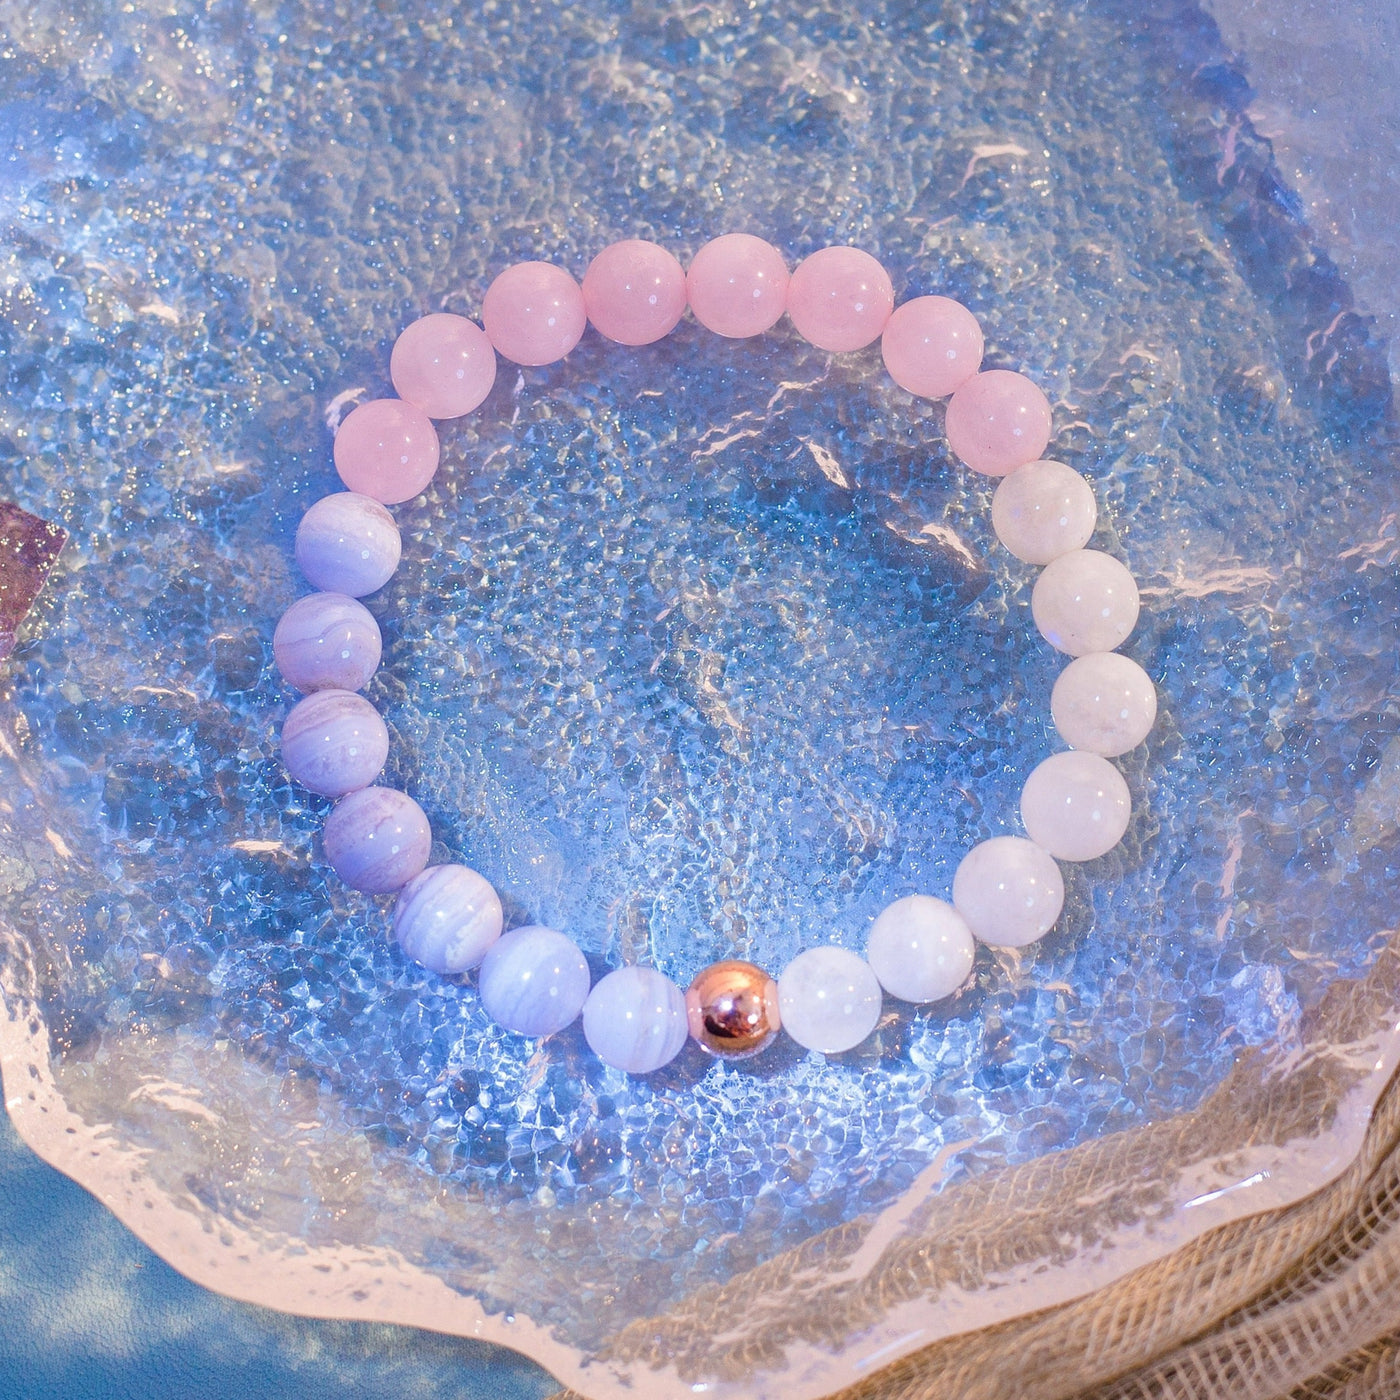 Attract Love Crystal Bracelet For Women | Bead Bracelet | Rose Quartz Moonstone Blue Lace Agate Wholesale Dropshipping Crystal Bracelets